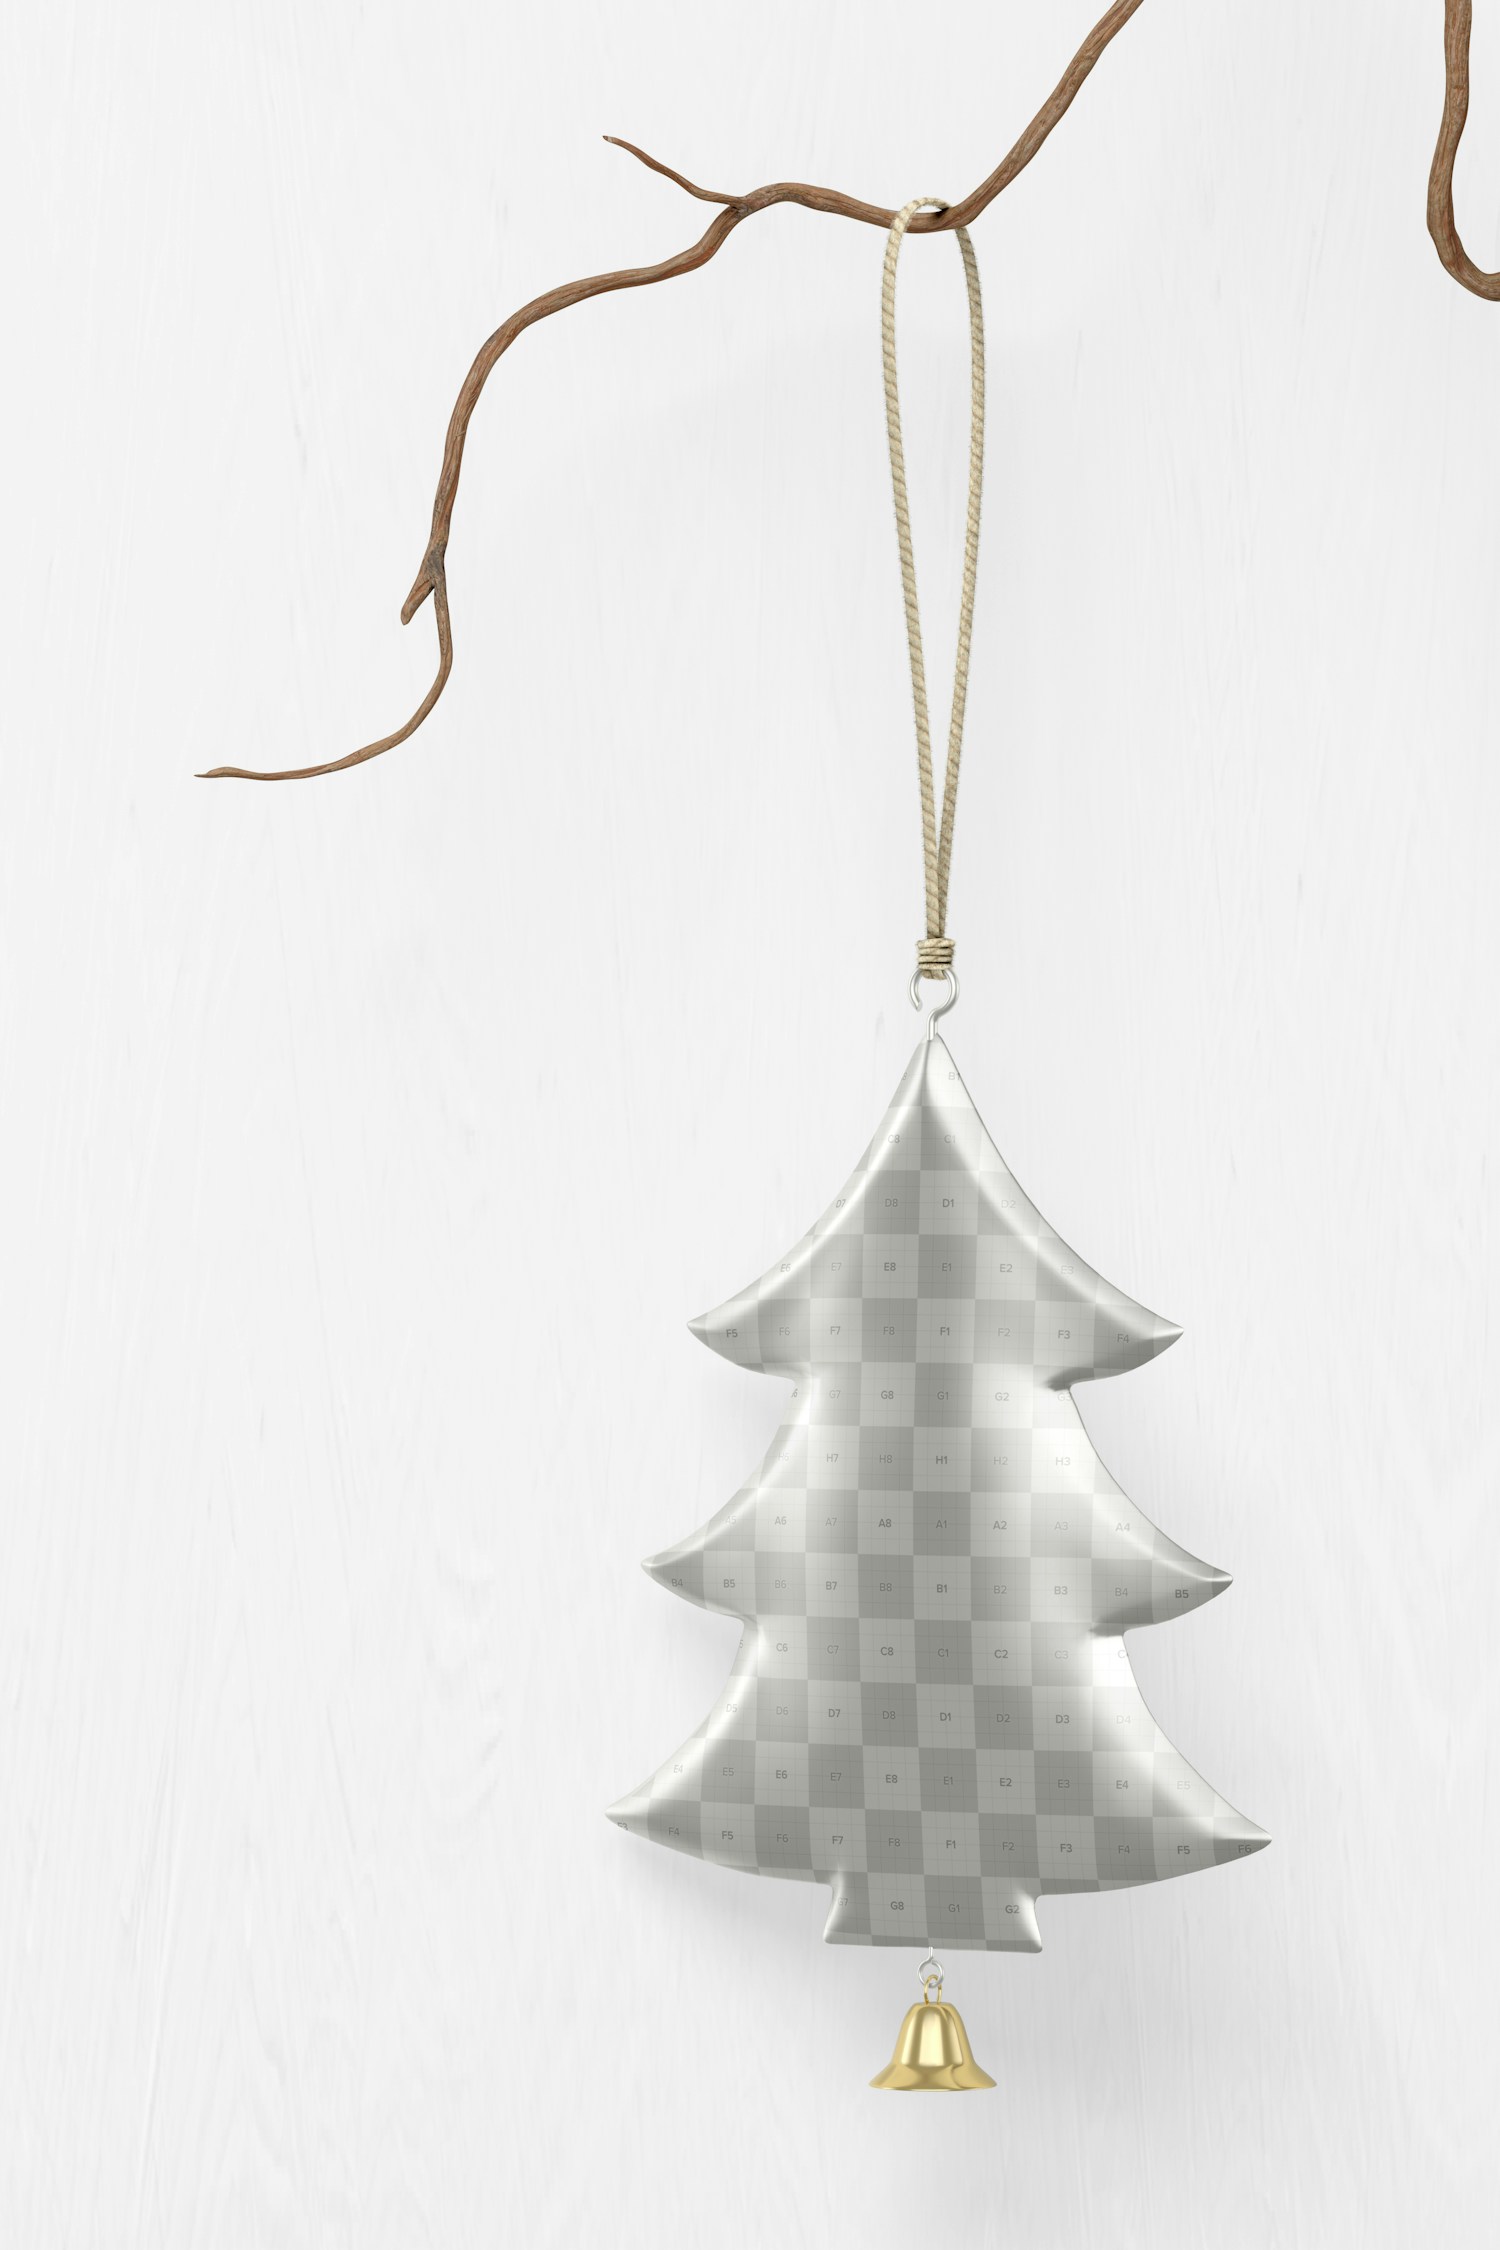 Metallic Christmas Tree Ornament Mockup, Hanging